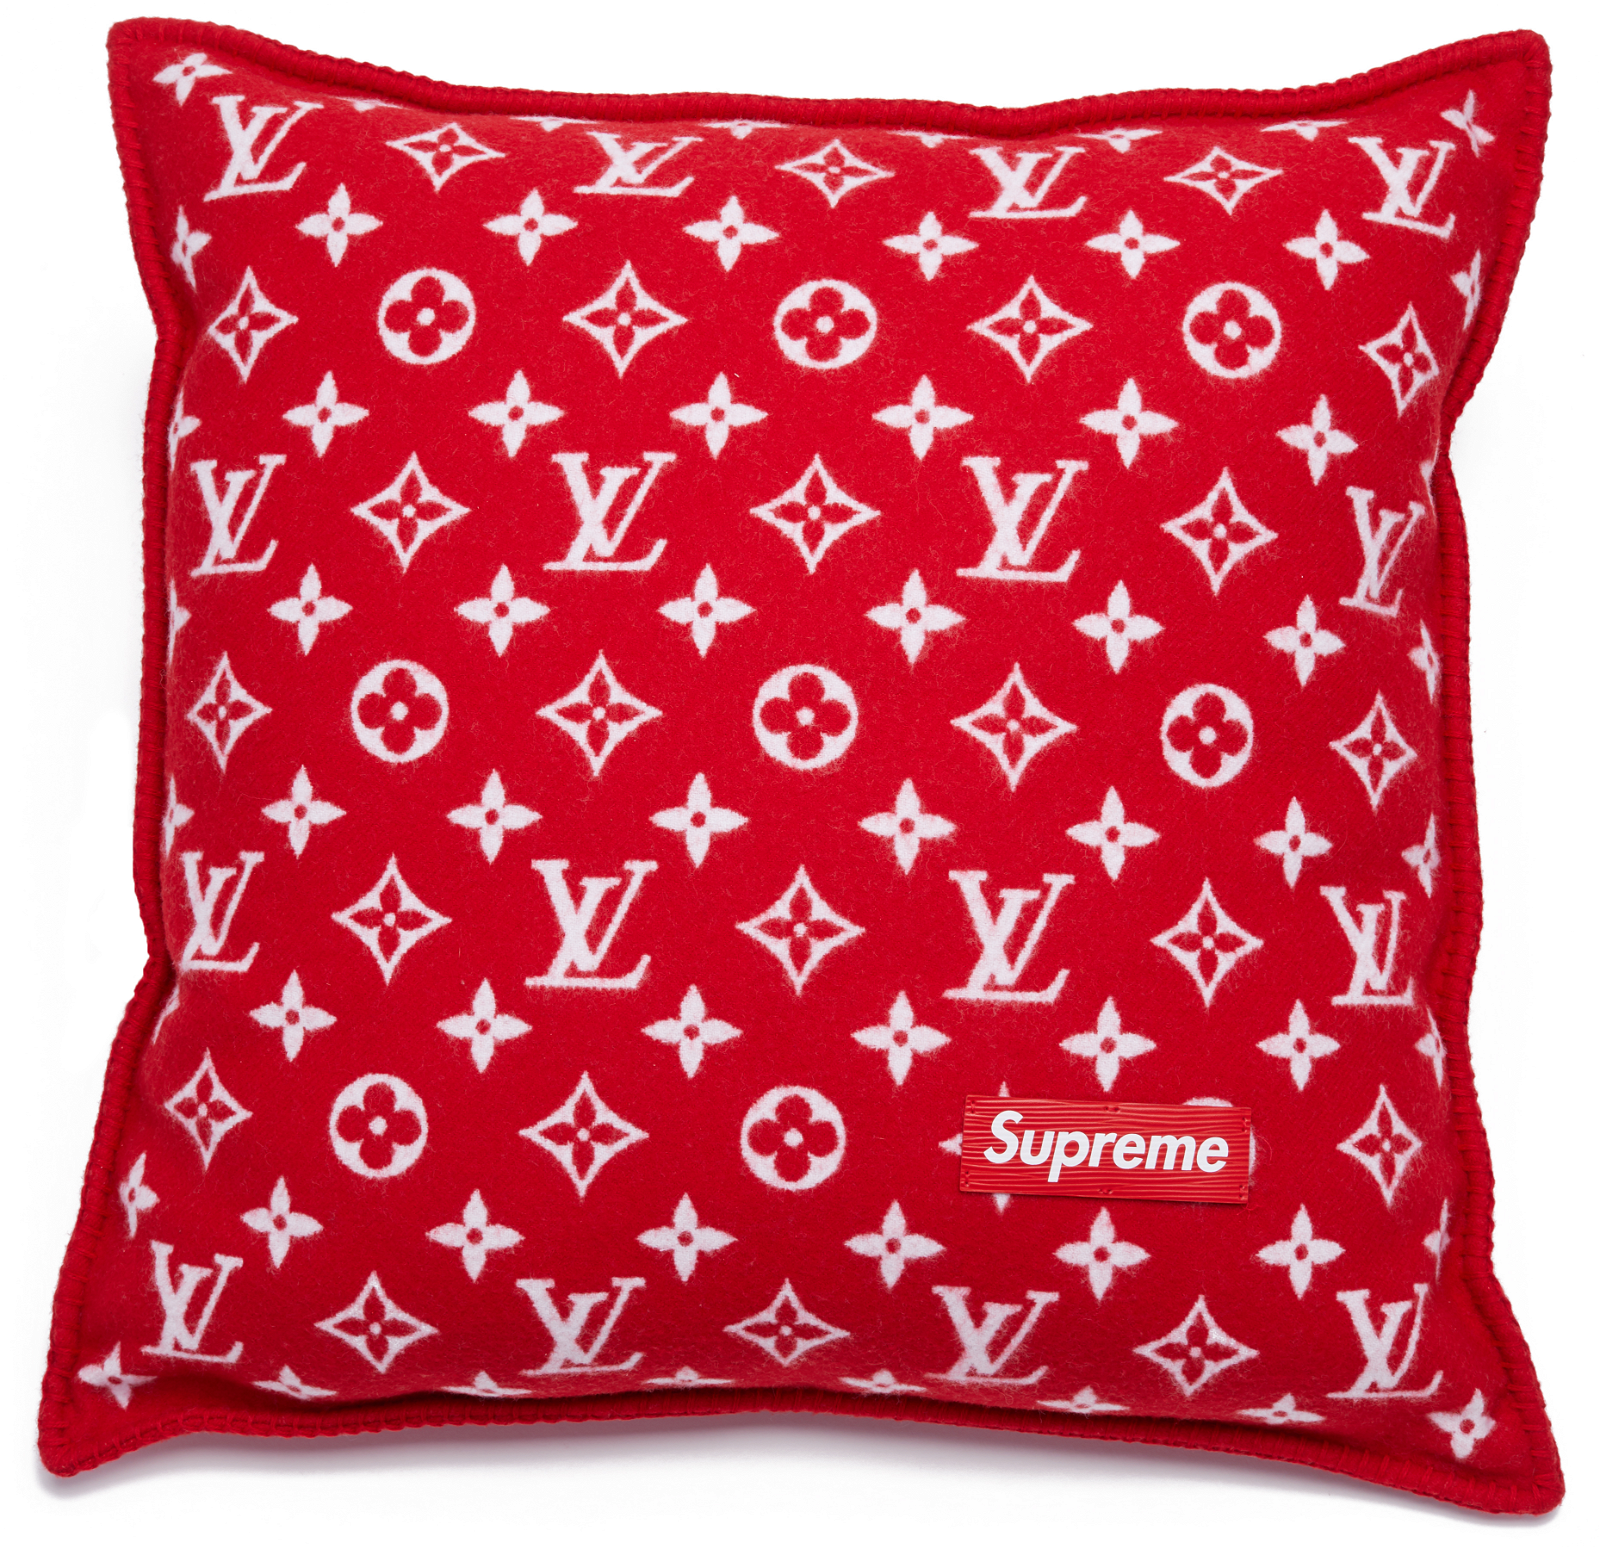 Supreme x Louis Vuitton Monogram Pillow Red sneaker informations